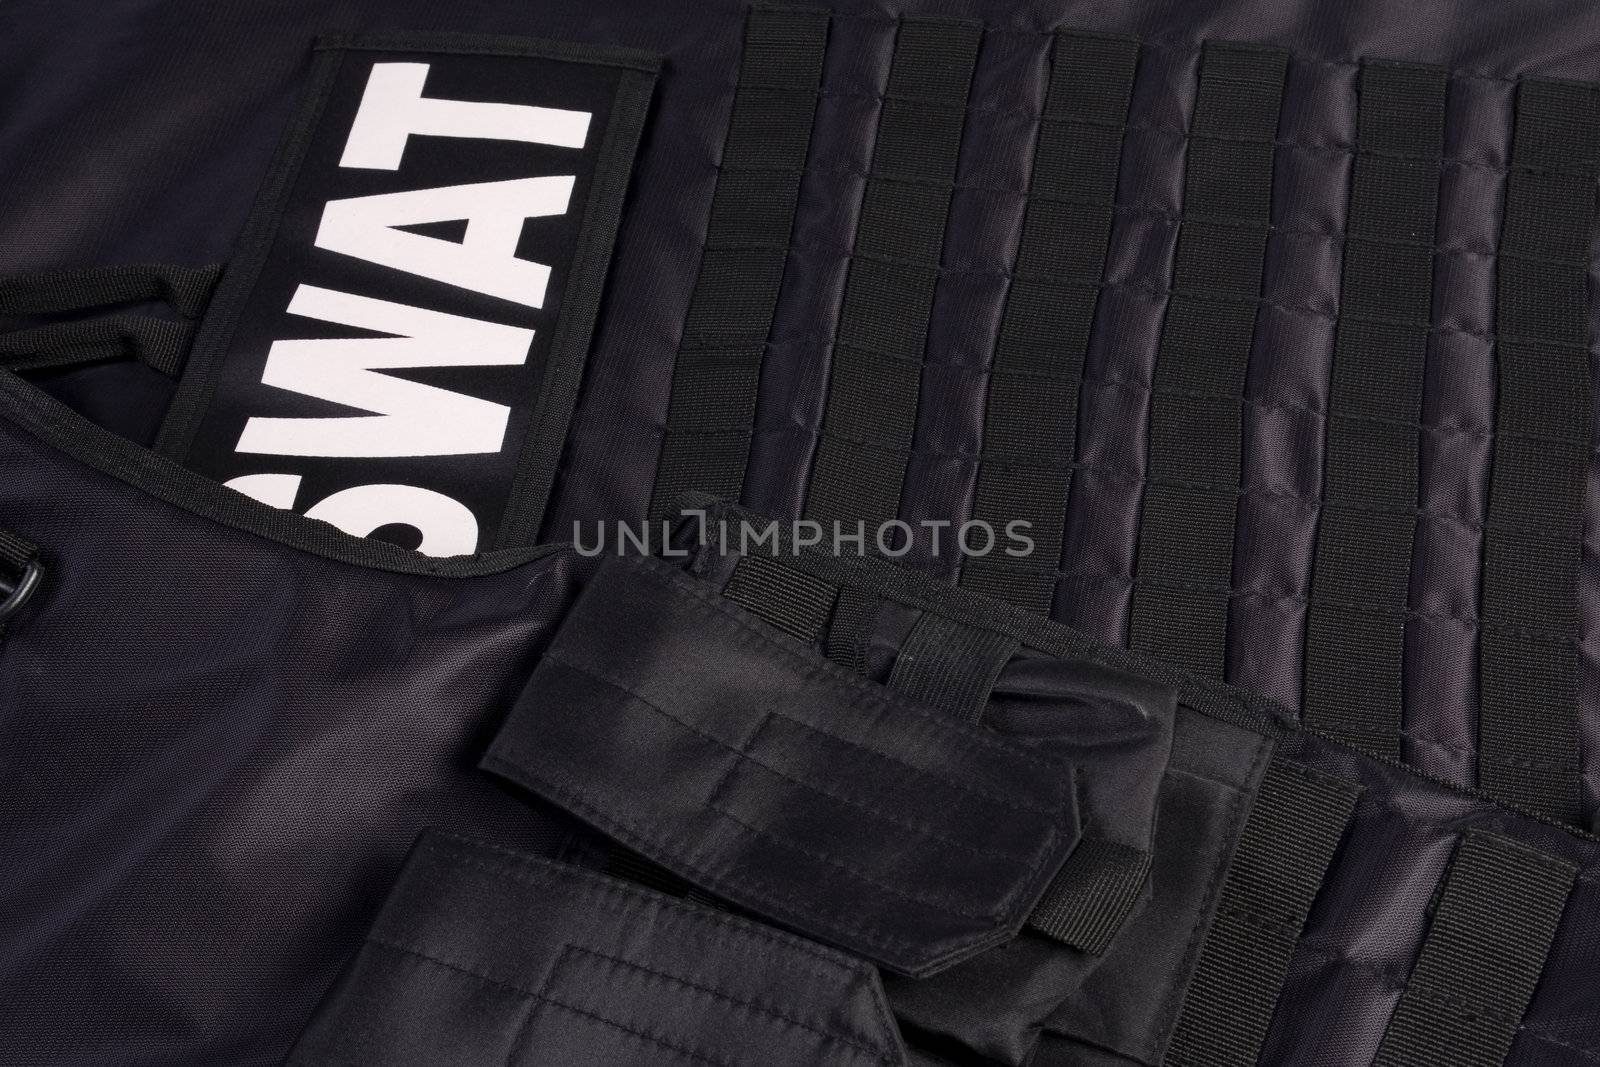 Armor suit SWAT unit back special forces police